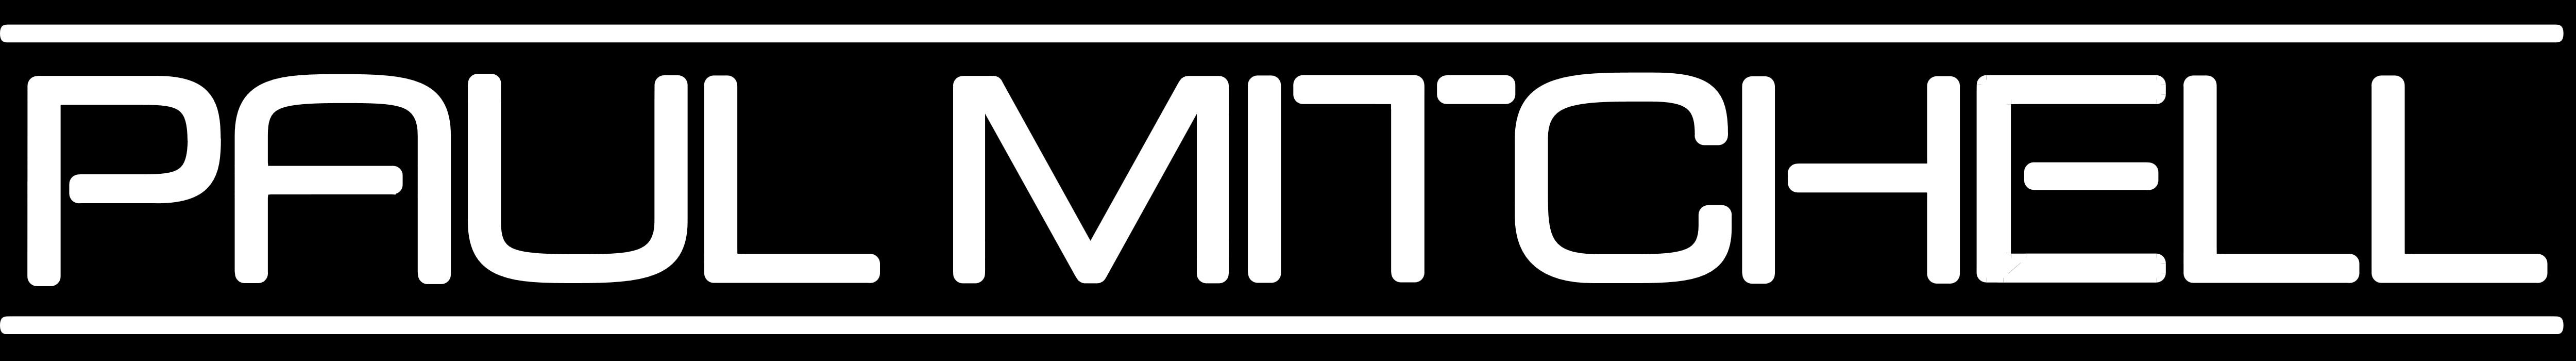 Mitchell Logo - Paul Mitchell – Logos Download